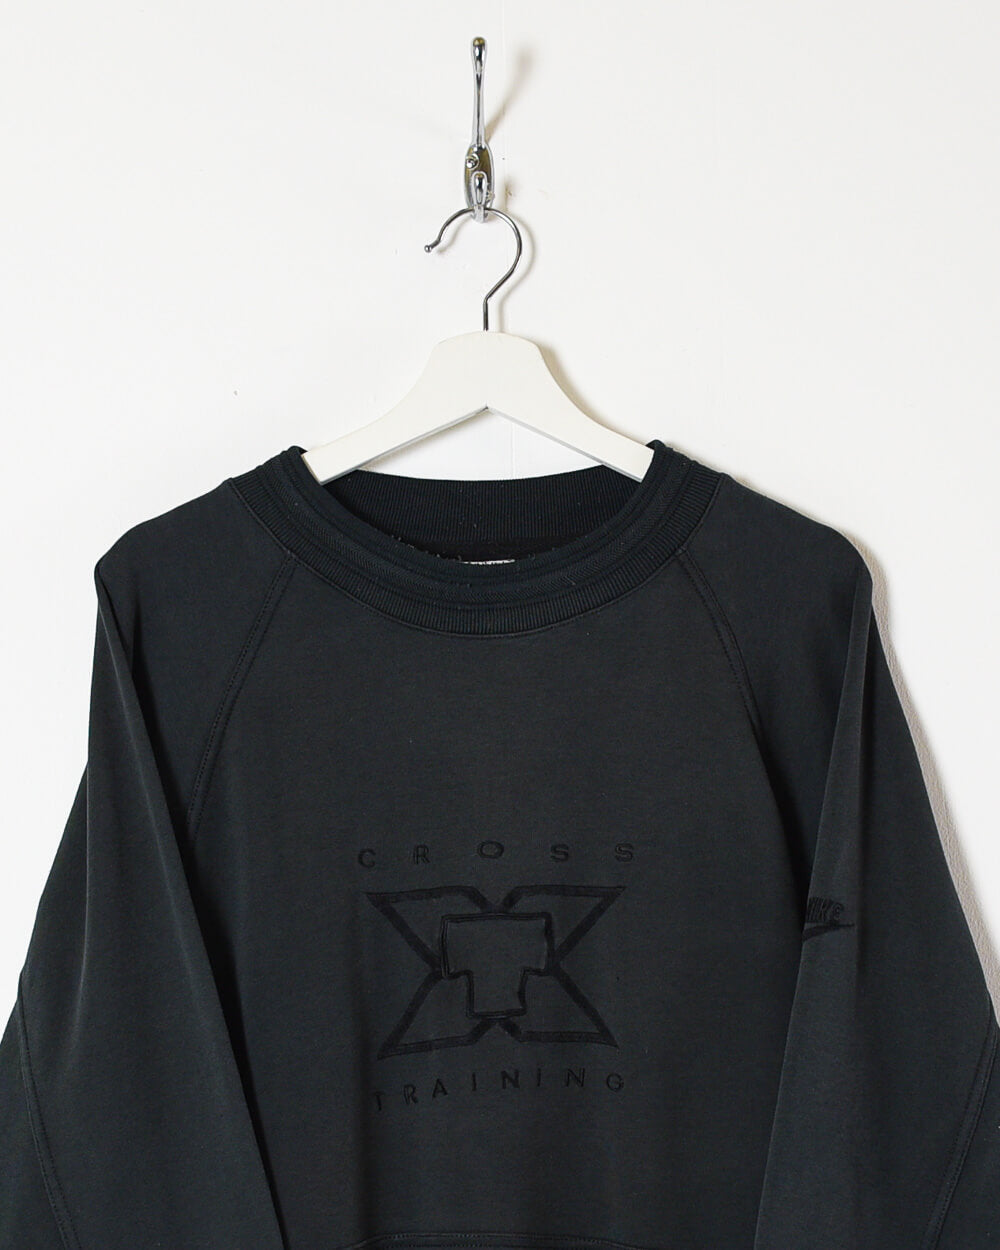 Black Nike Cross Training Sweatshirt - Medium